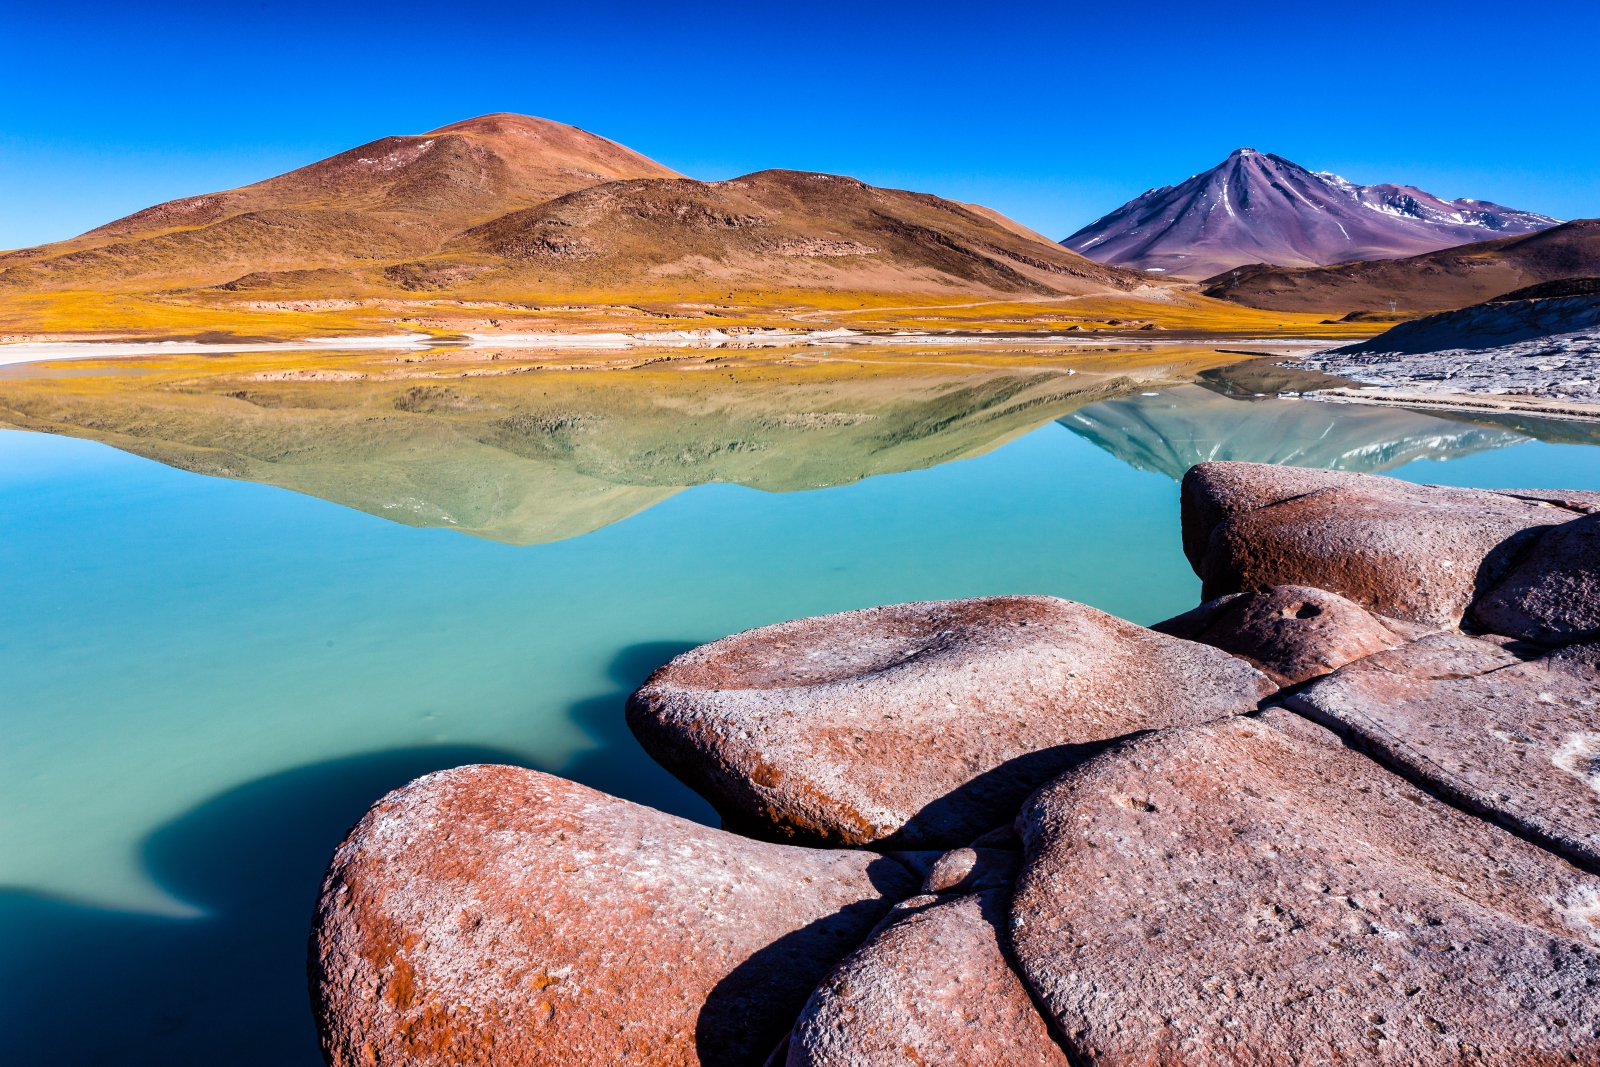 Lake in the Atacama Desert